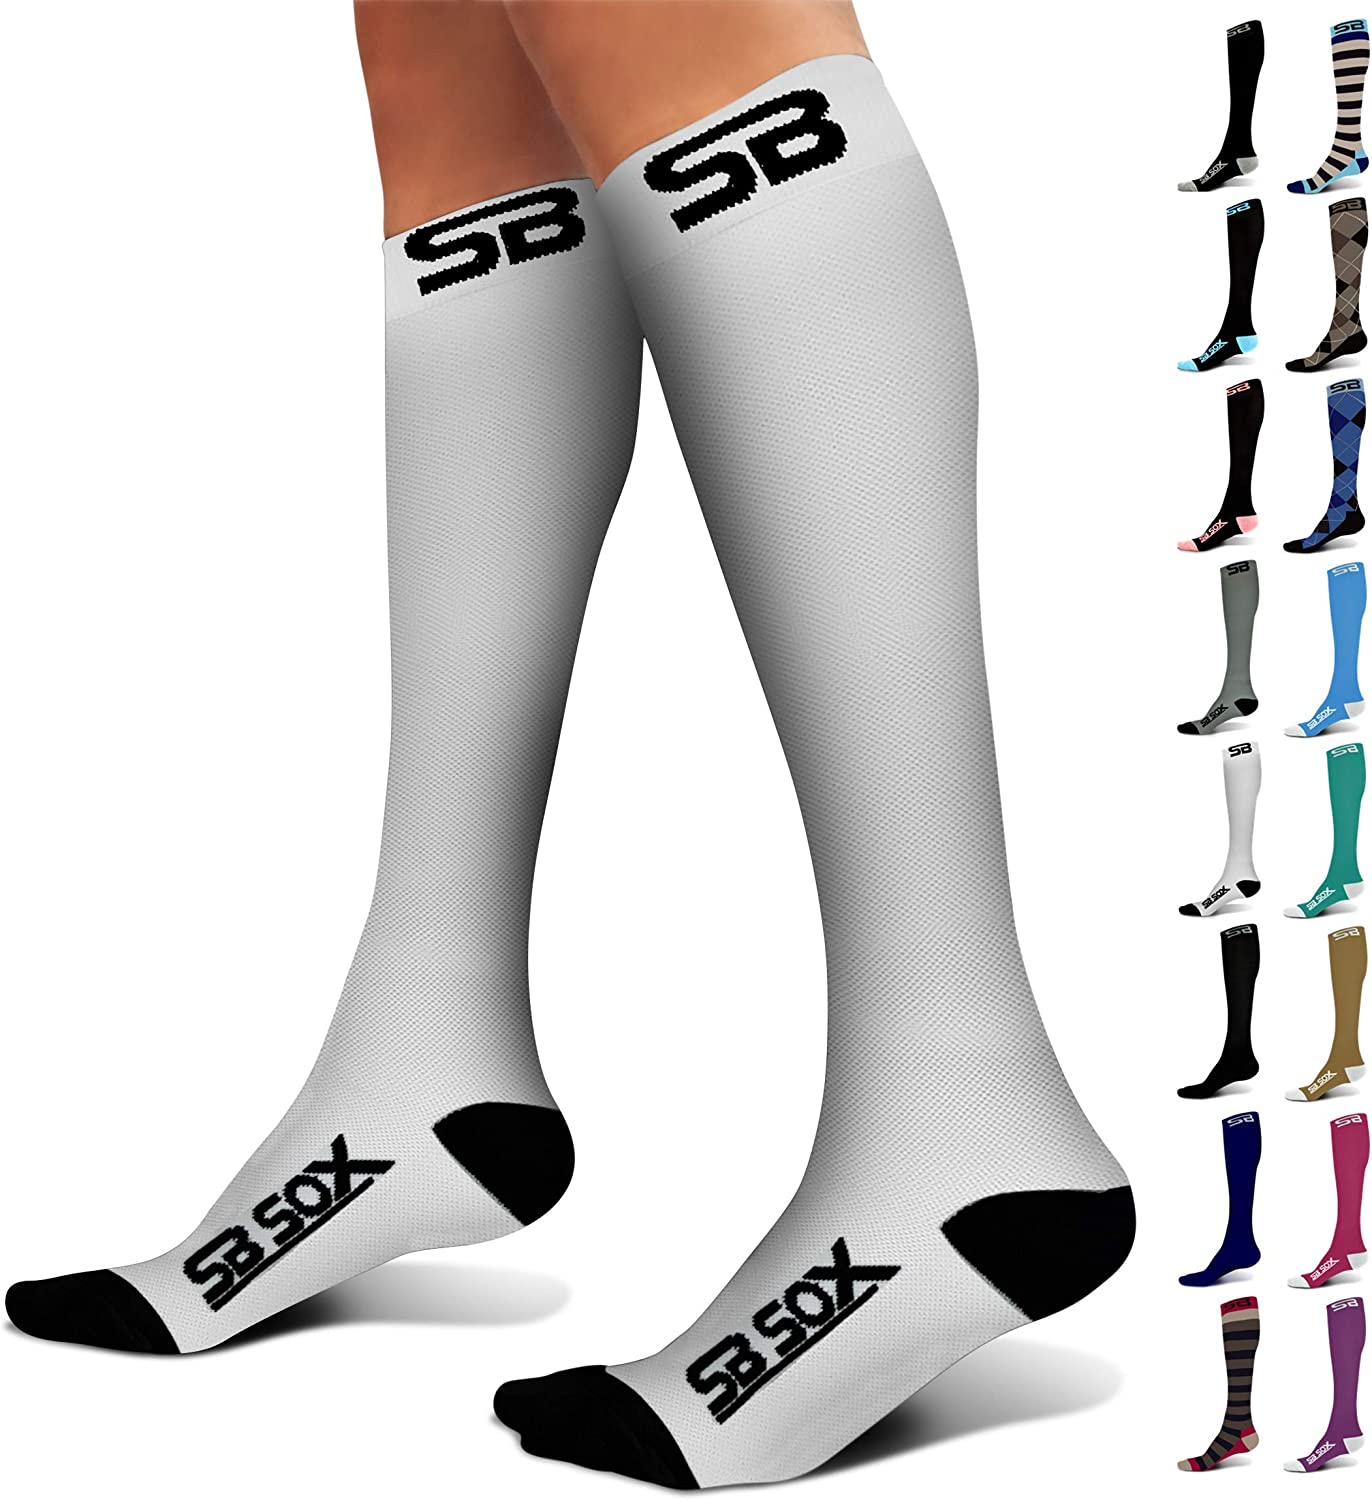 SB SOX Compression Socks (20-30mmHg) for Men & Women – Best